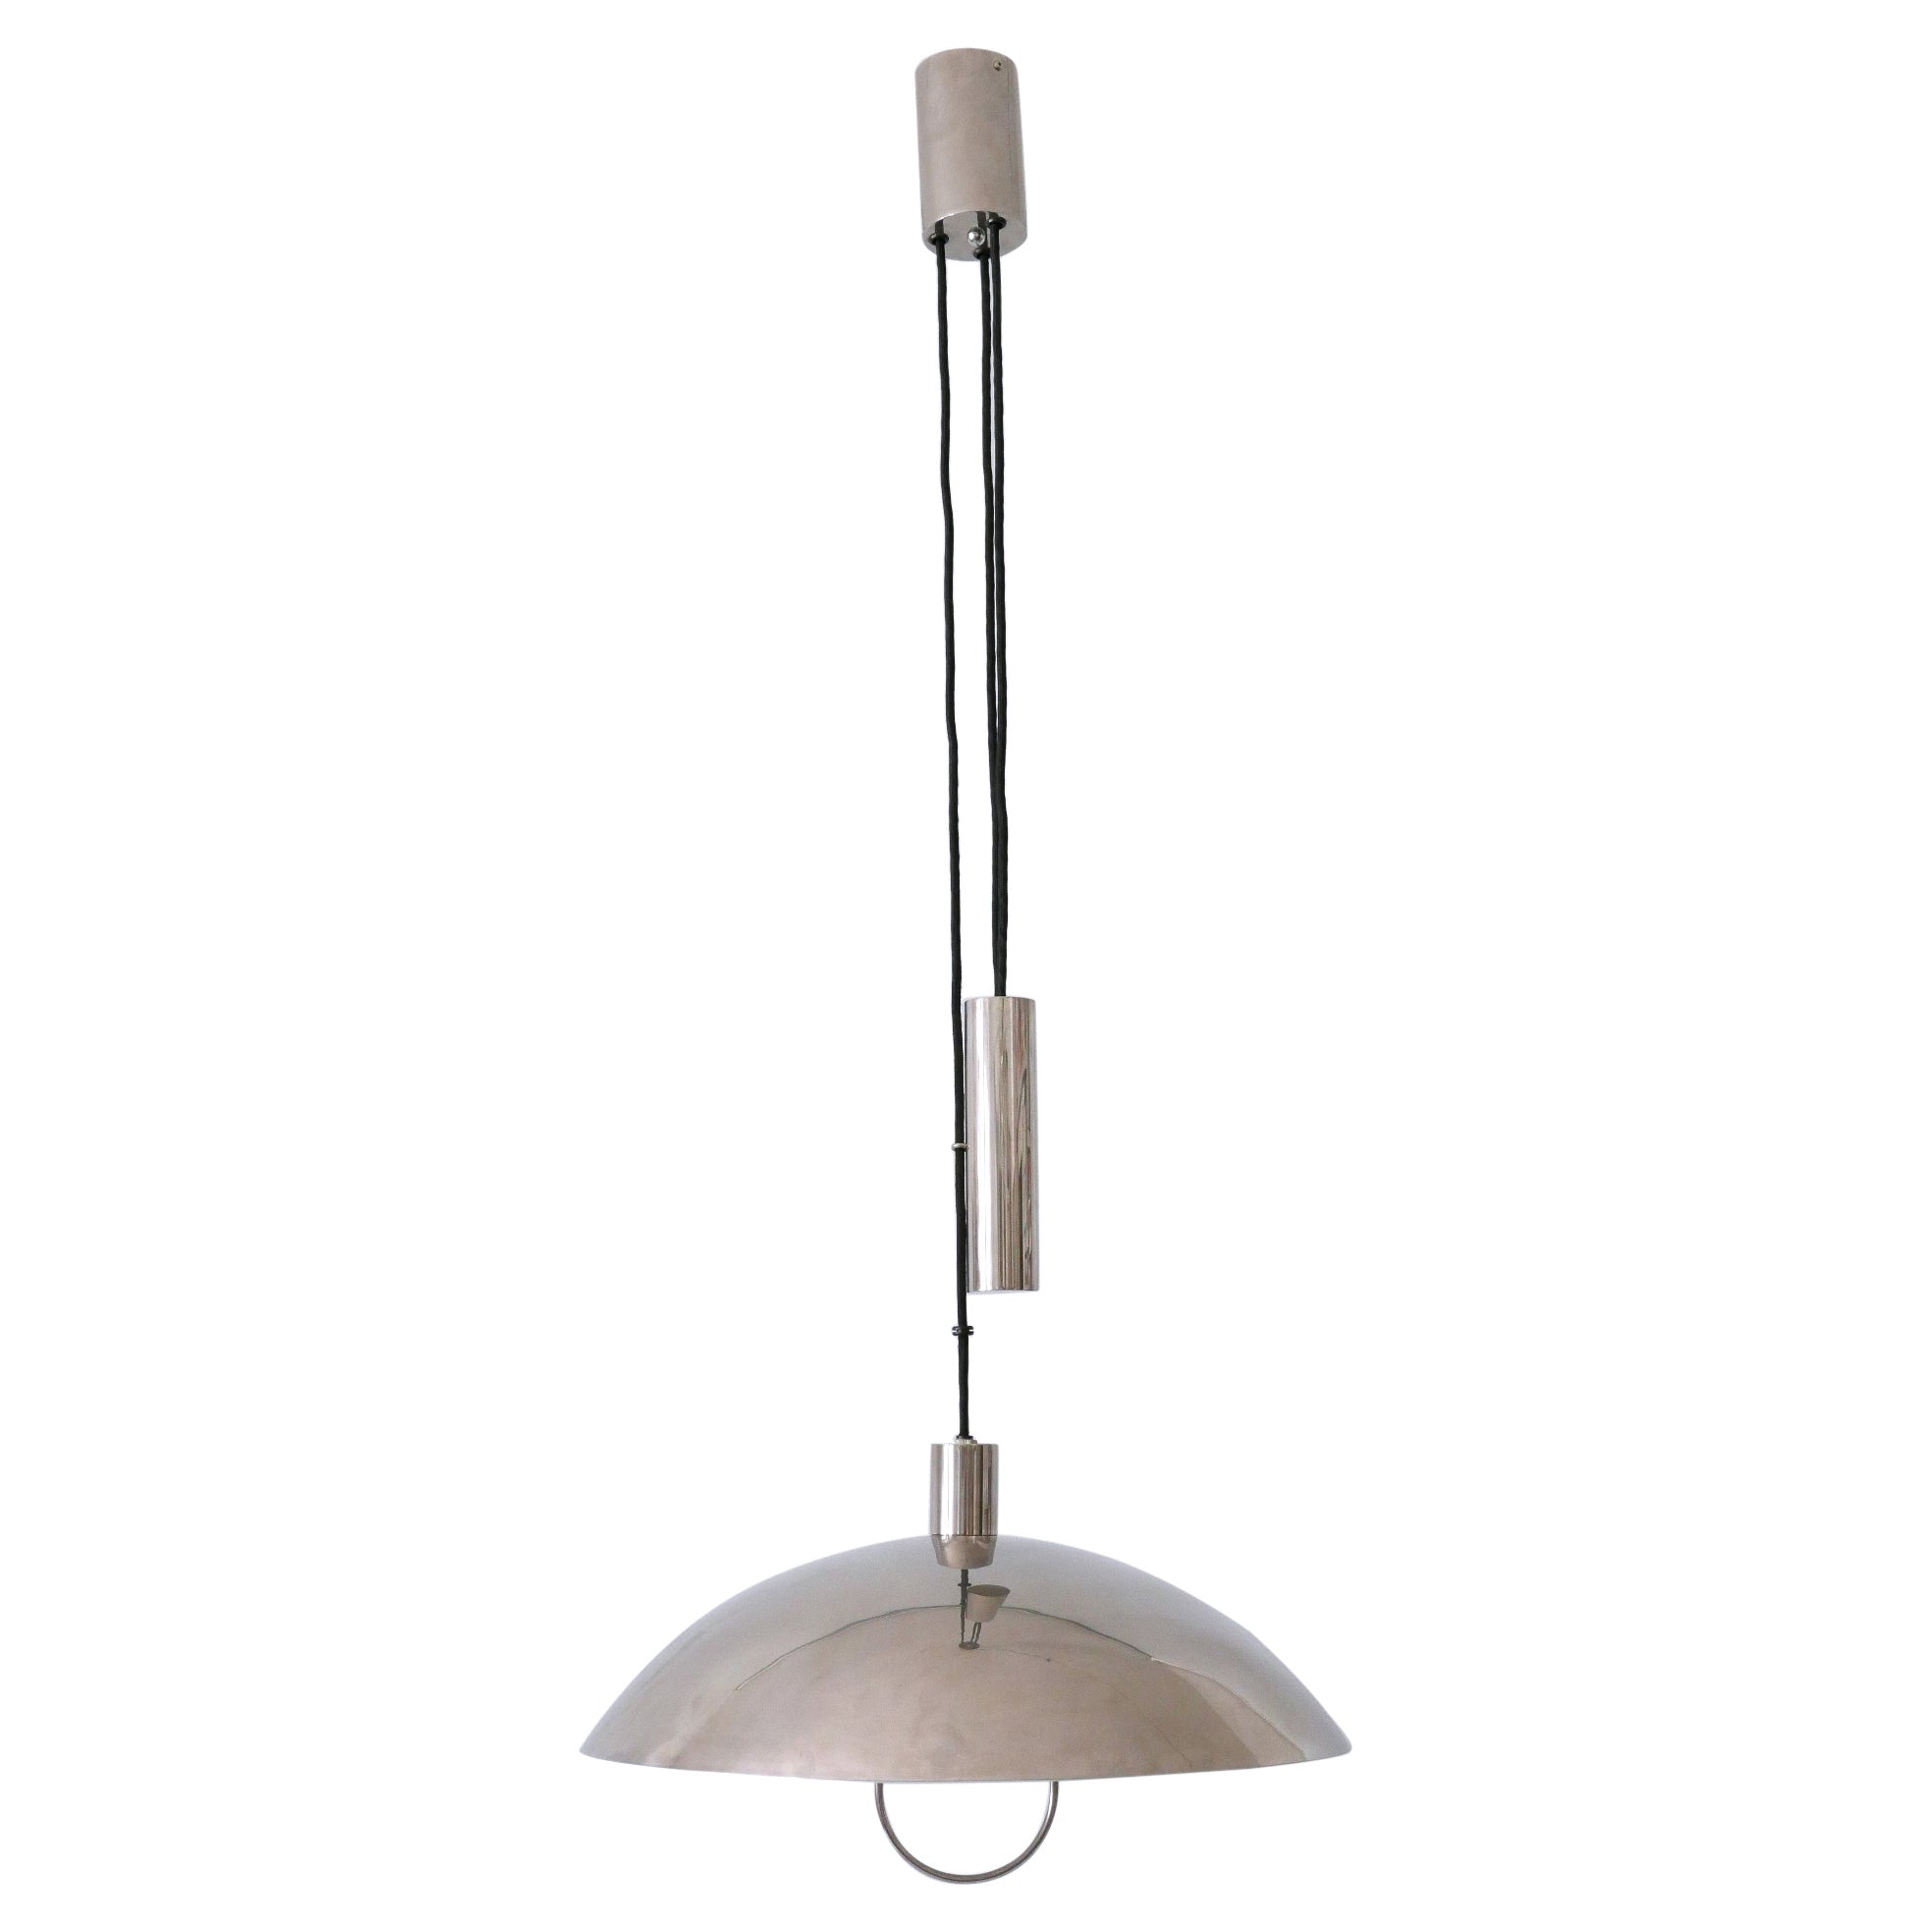 Early Tecnolumen Pendant Lamp 'Bauhaus HMB 25/500' by Marianne Brandt 1980s For Sale